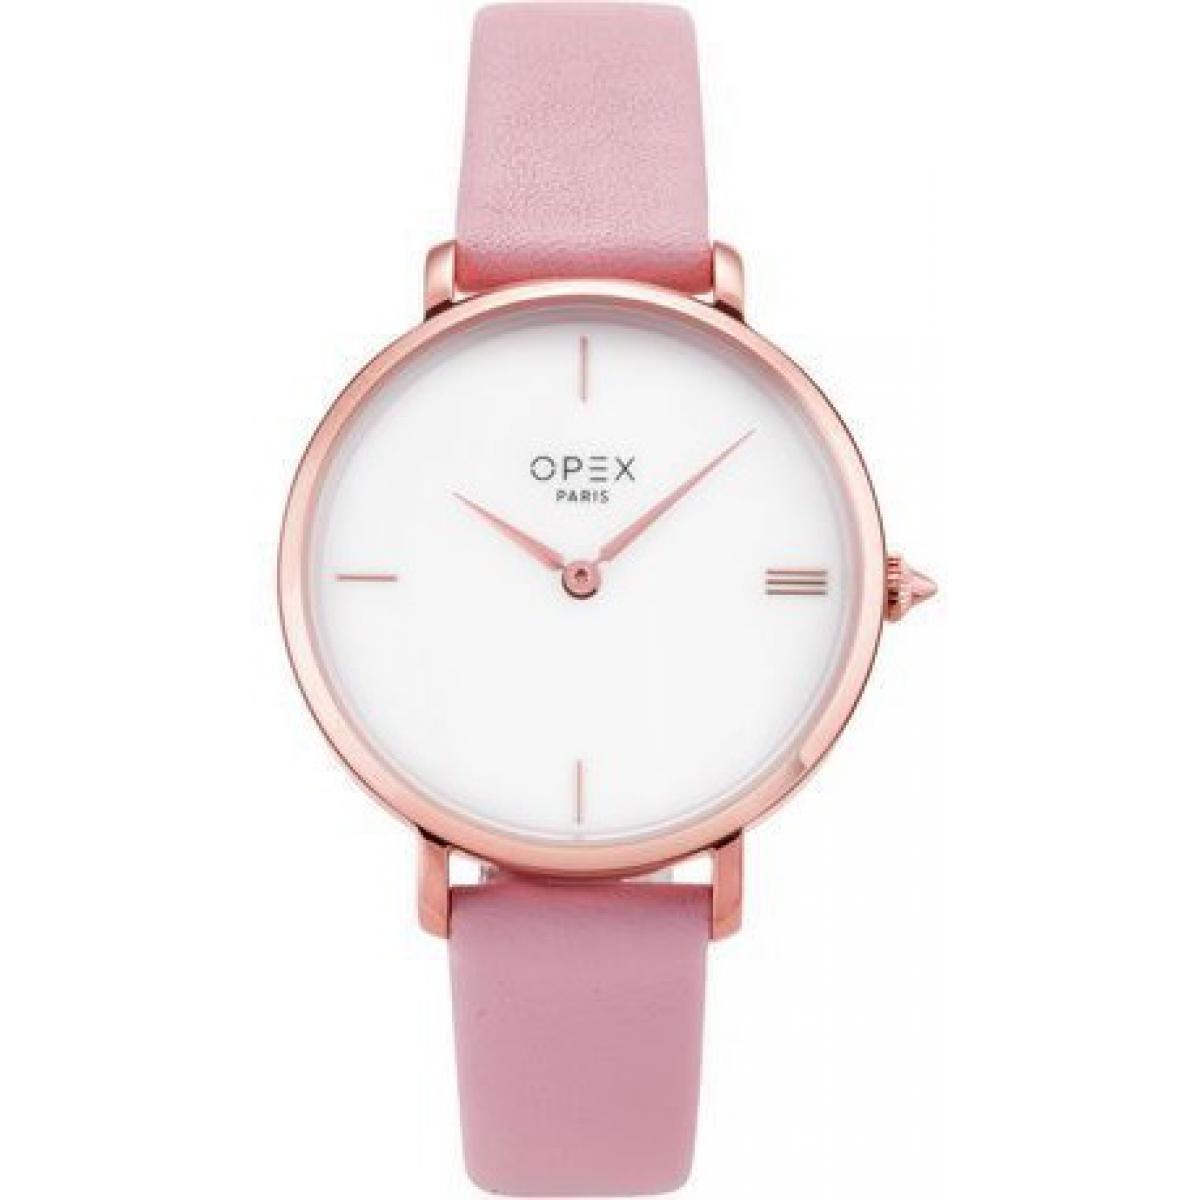 Promo : Montre Opex OPW033 - ROTONDE Bracelet Cuir Rose Boîtier Acier Doré rose Femme